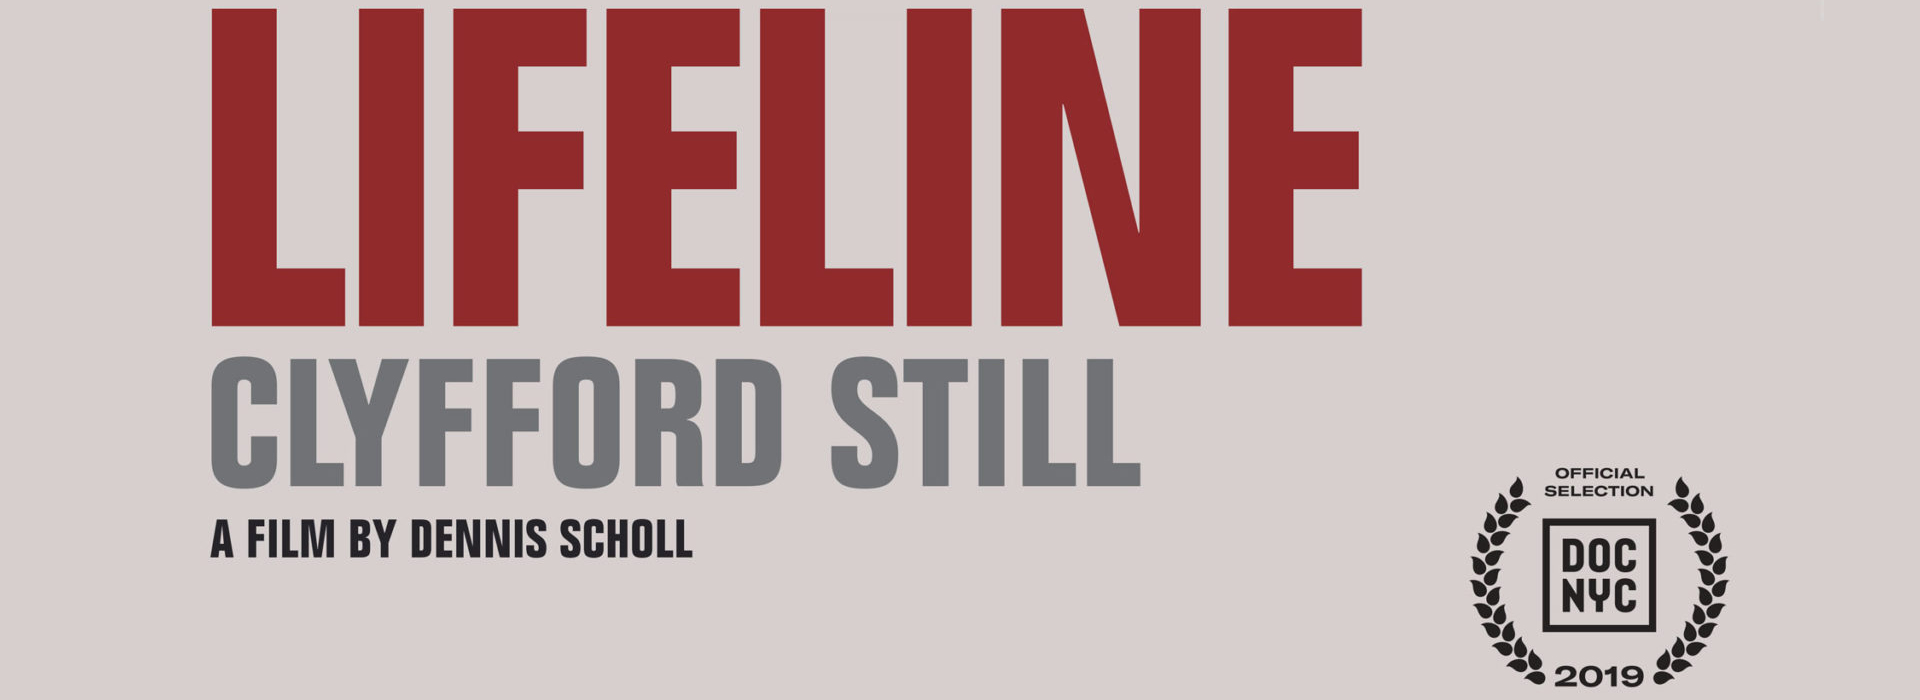 Lifeline: Clyfford Still film poster